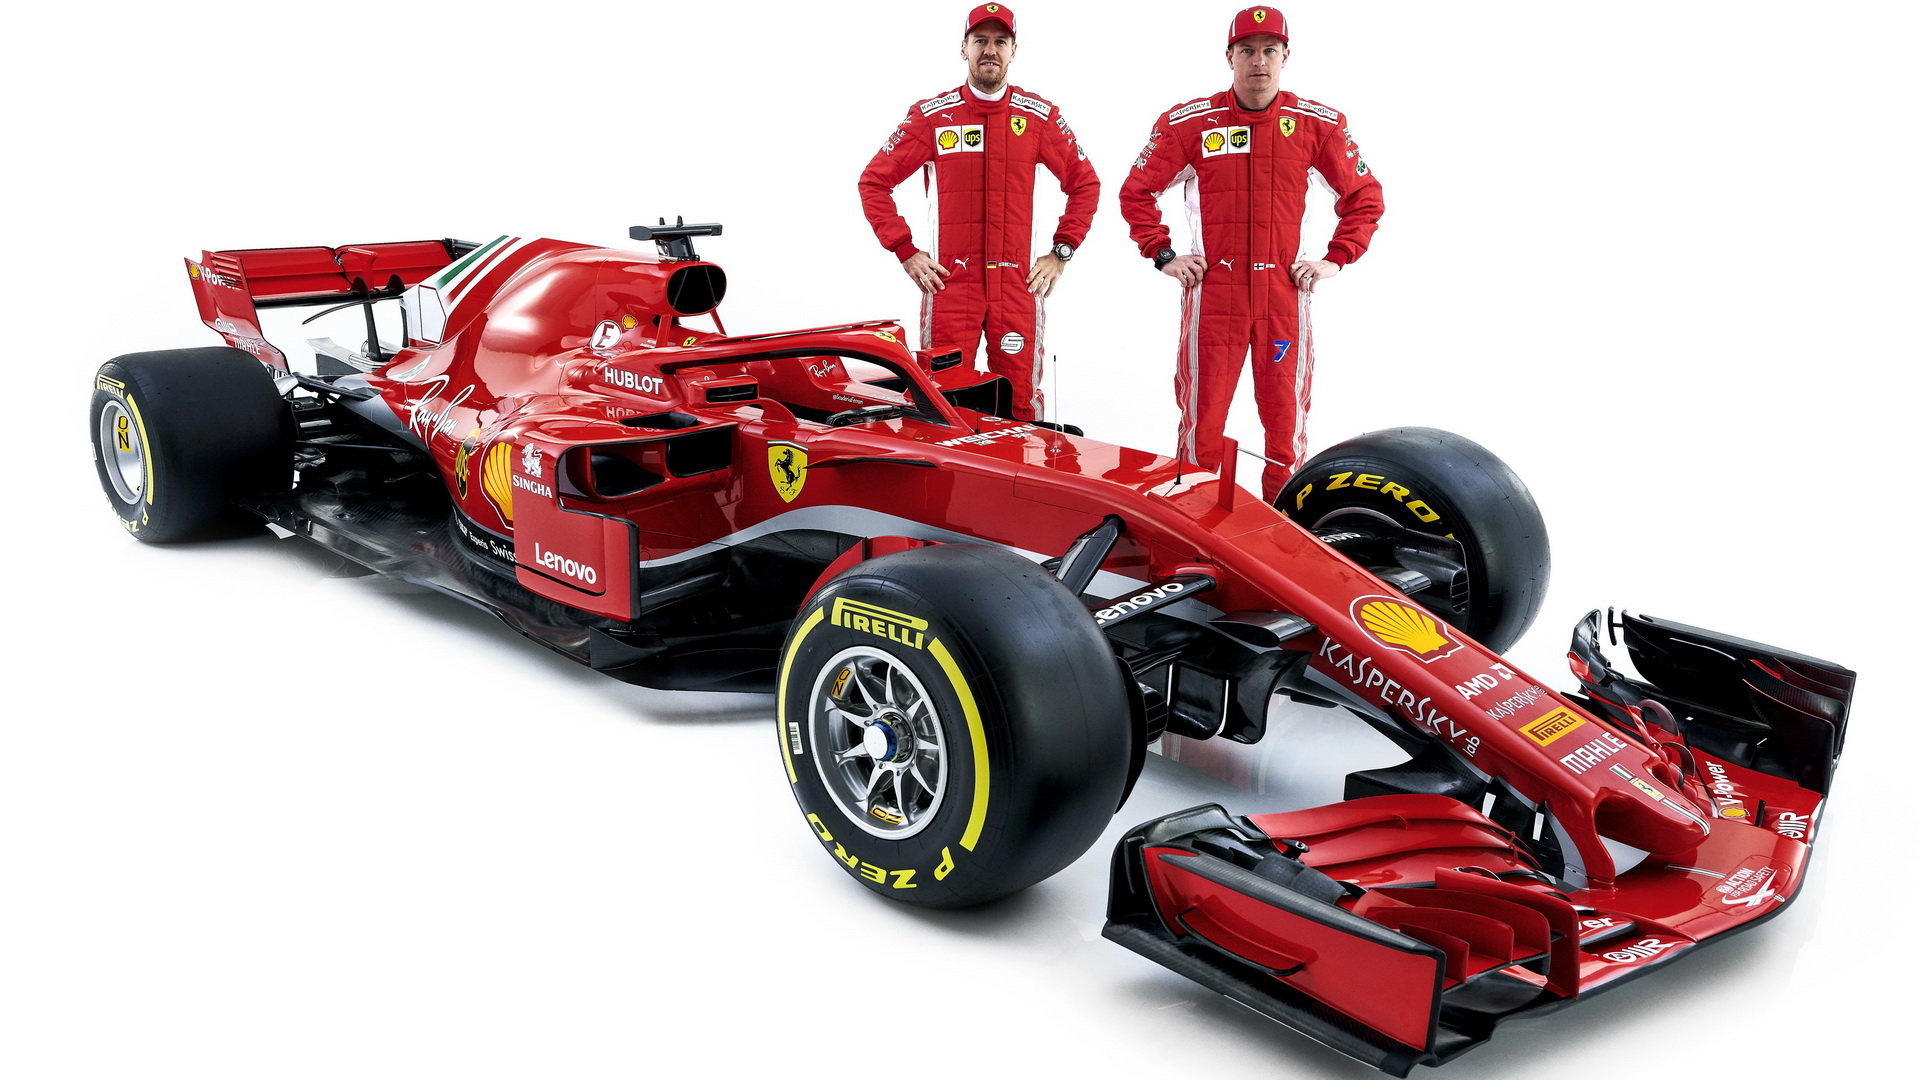 Představení nového vozu Ferrari SF71H po bohu Sebastiana Vettela a Kimi Räikkönen